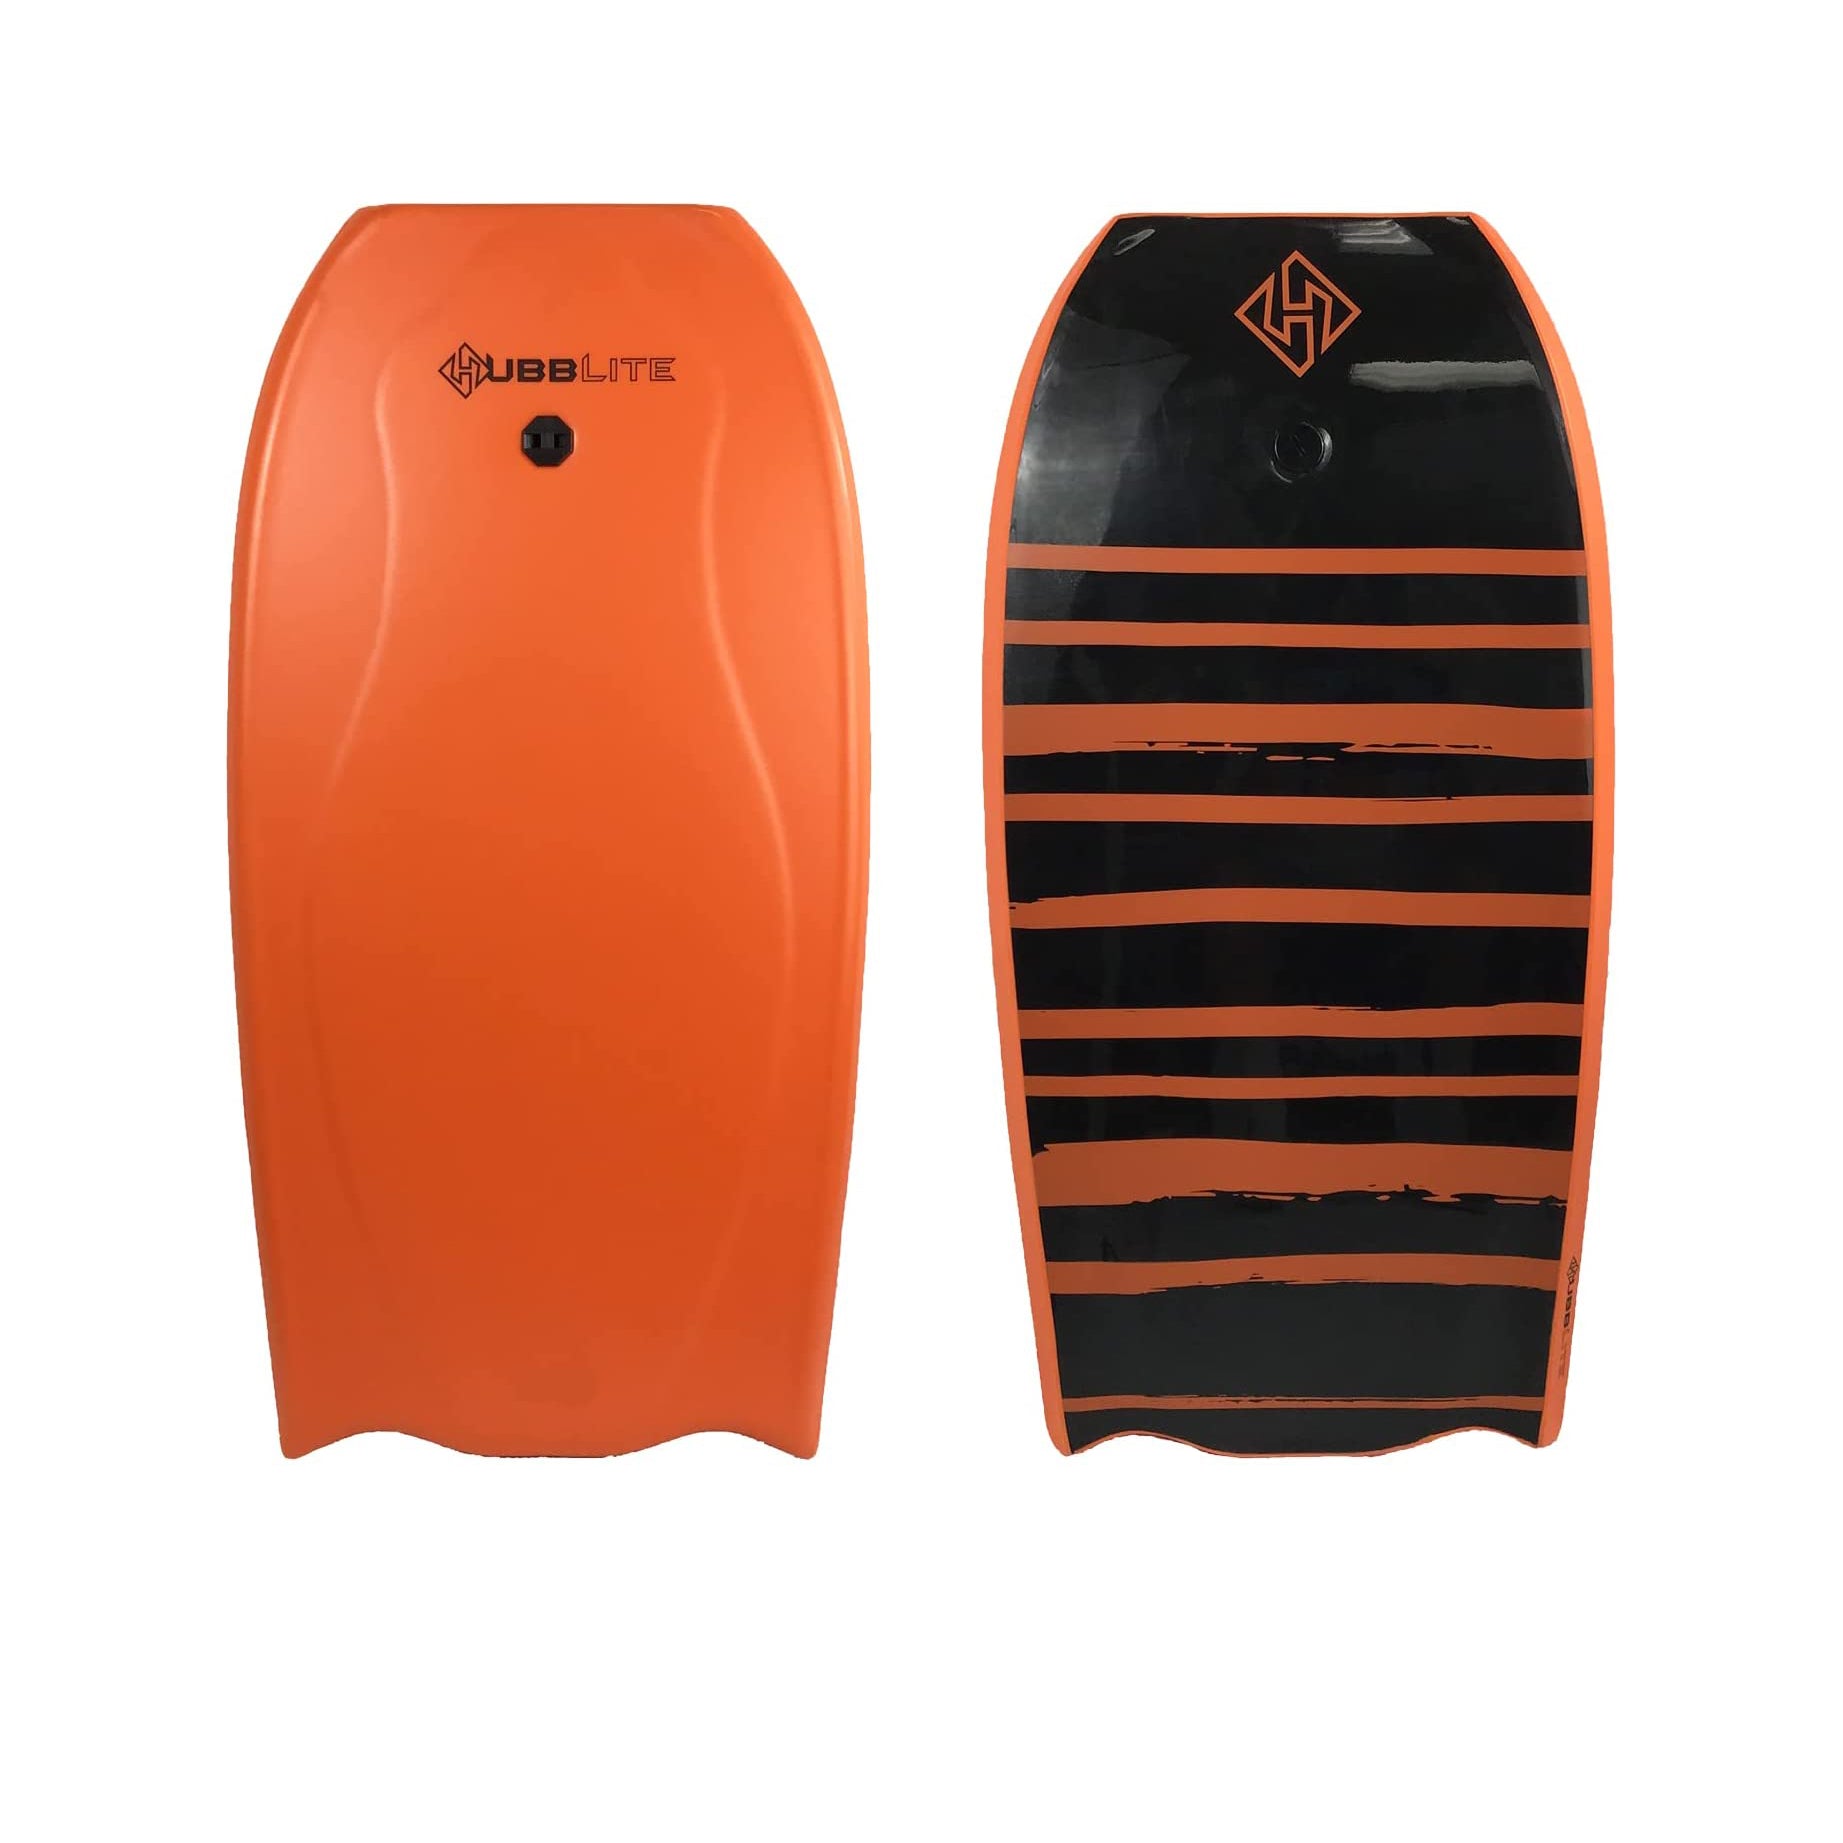 Hubboards Hubblite Bodyboard Orange-Orange-Black 45in